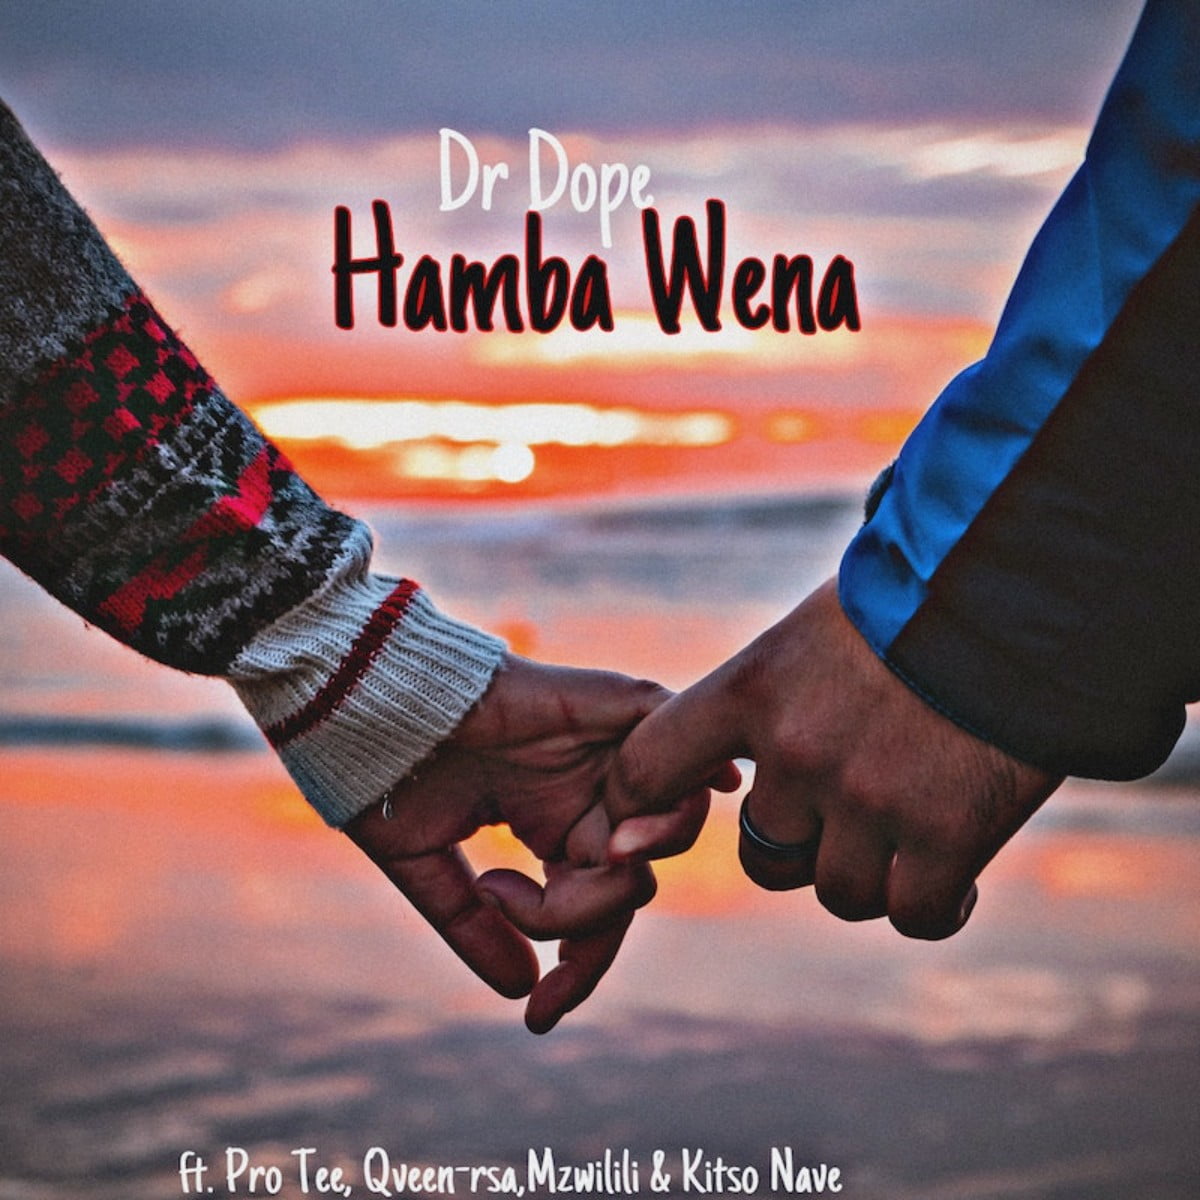 Dr Dope - Hamba Wena ft. Pro Tee, Qveen-rsa, Mzwilili & Kitso Nave mp3 download free lyrics